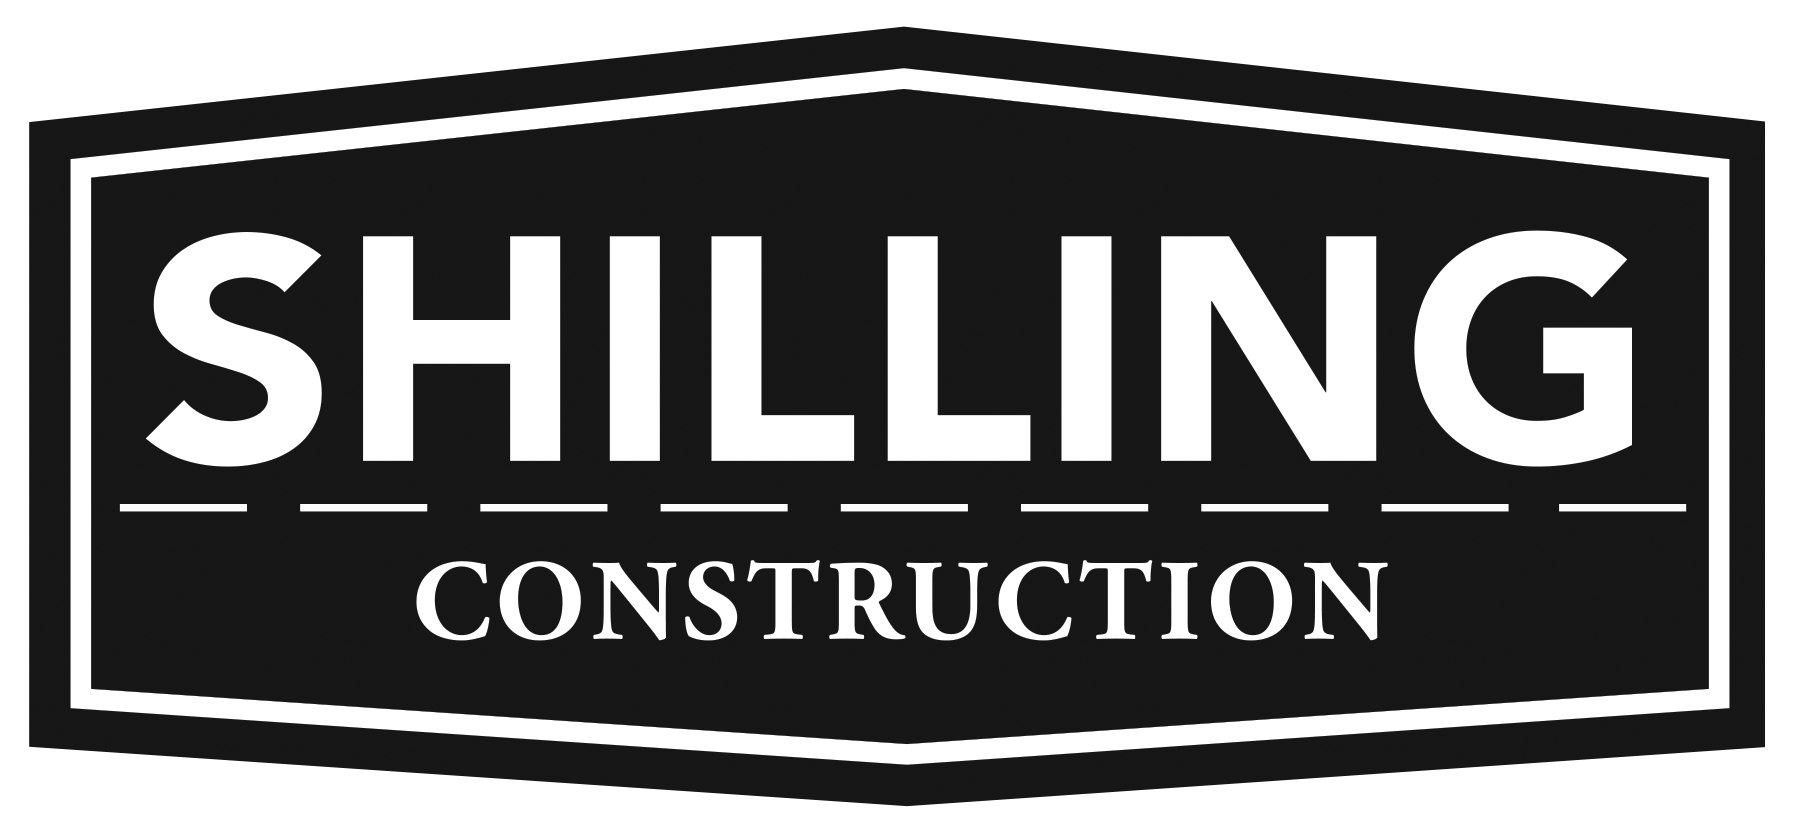 Shilling Construction Co.